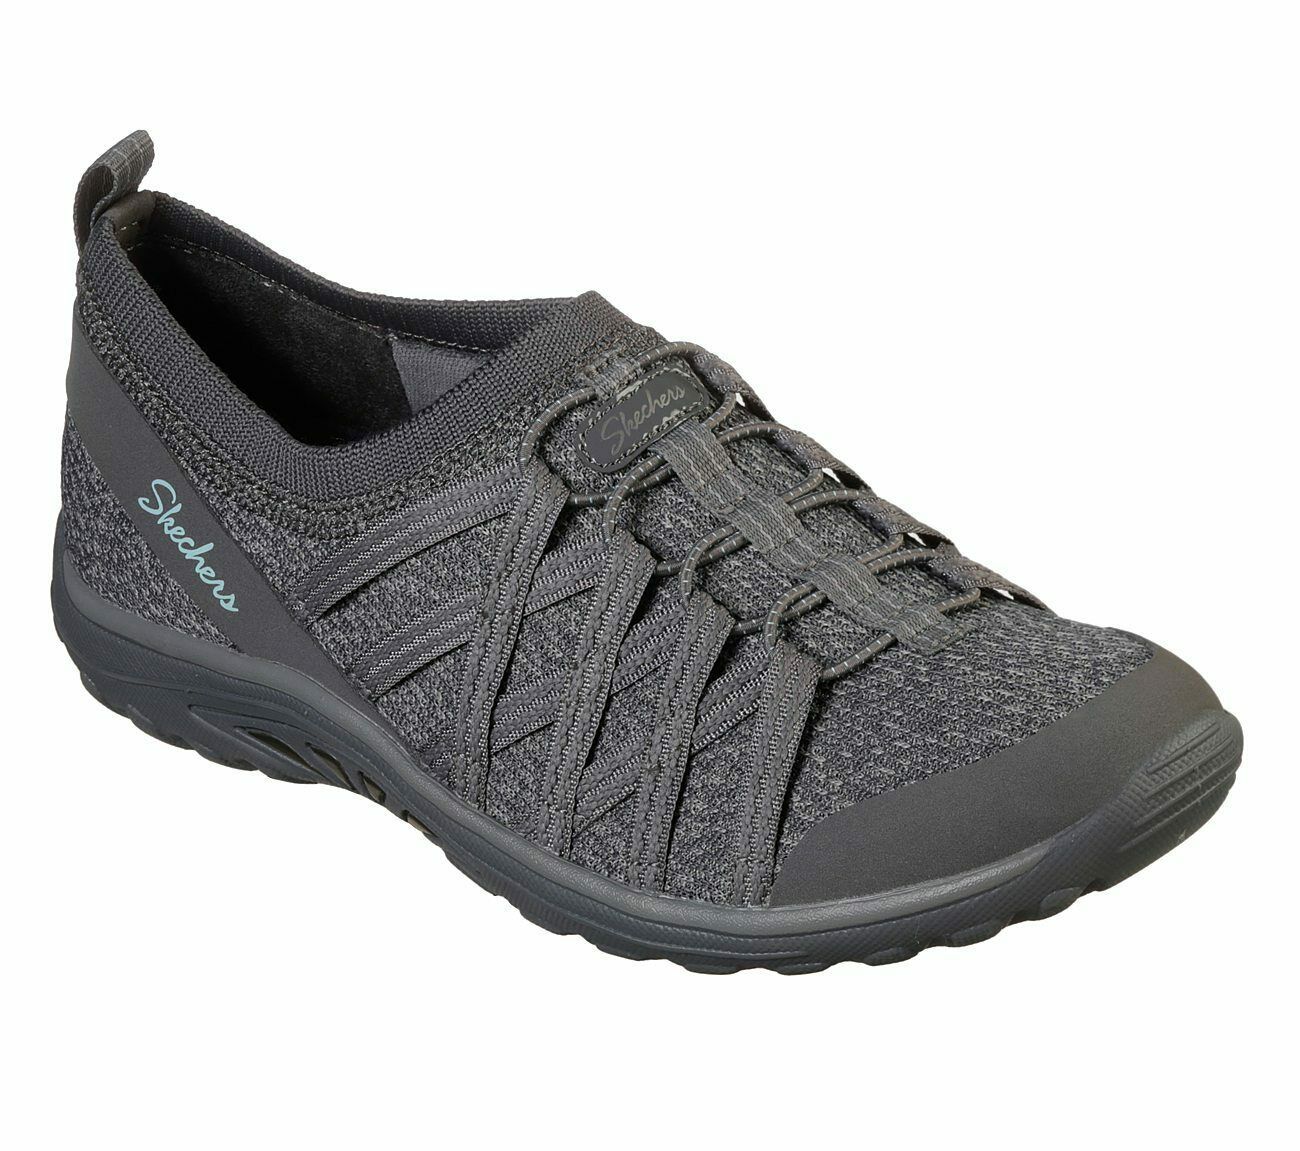 Skechers Charcoal shoes Memory Foam Women Comfort Casual Sporty Walk ...